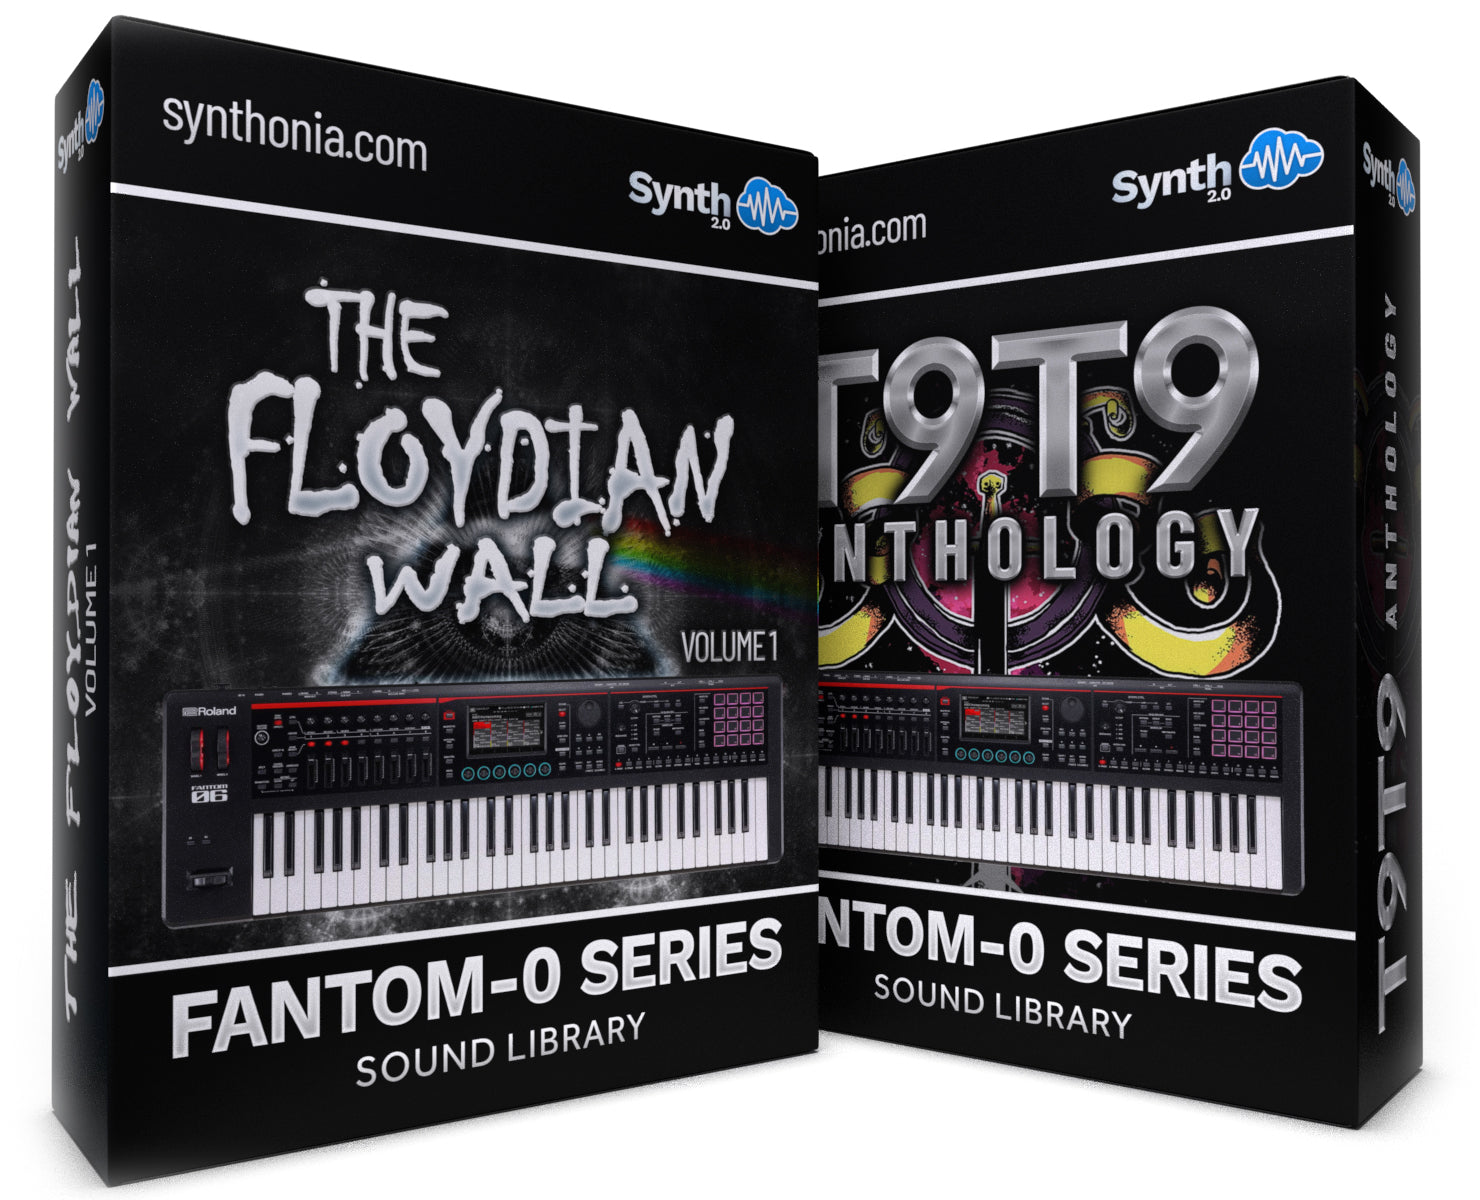 SCL452 - ( Bundle ) - The Floydian Wall Vol.1 + T9T9 Anthology - Fantom-0